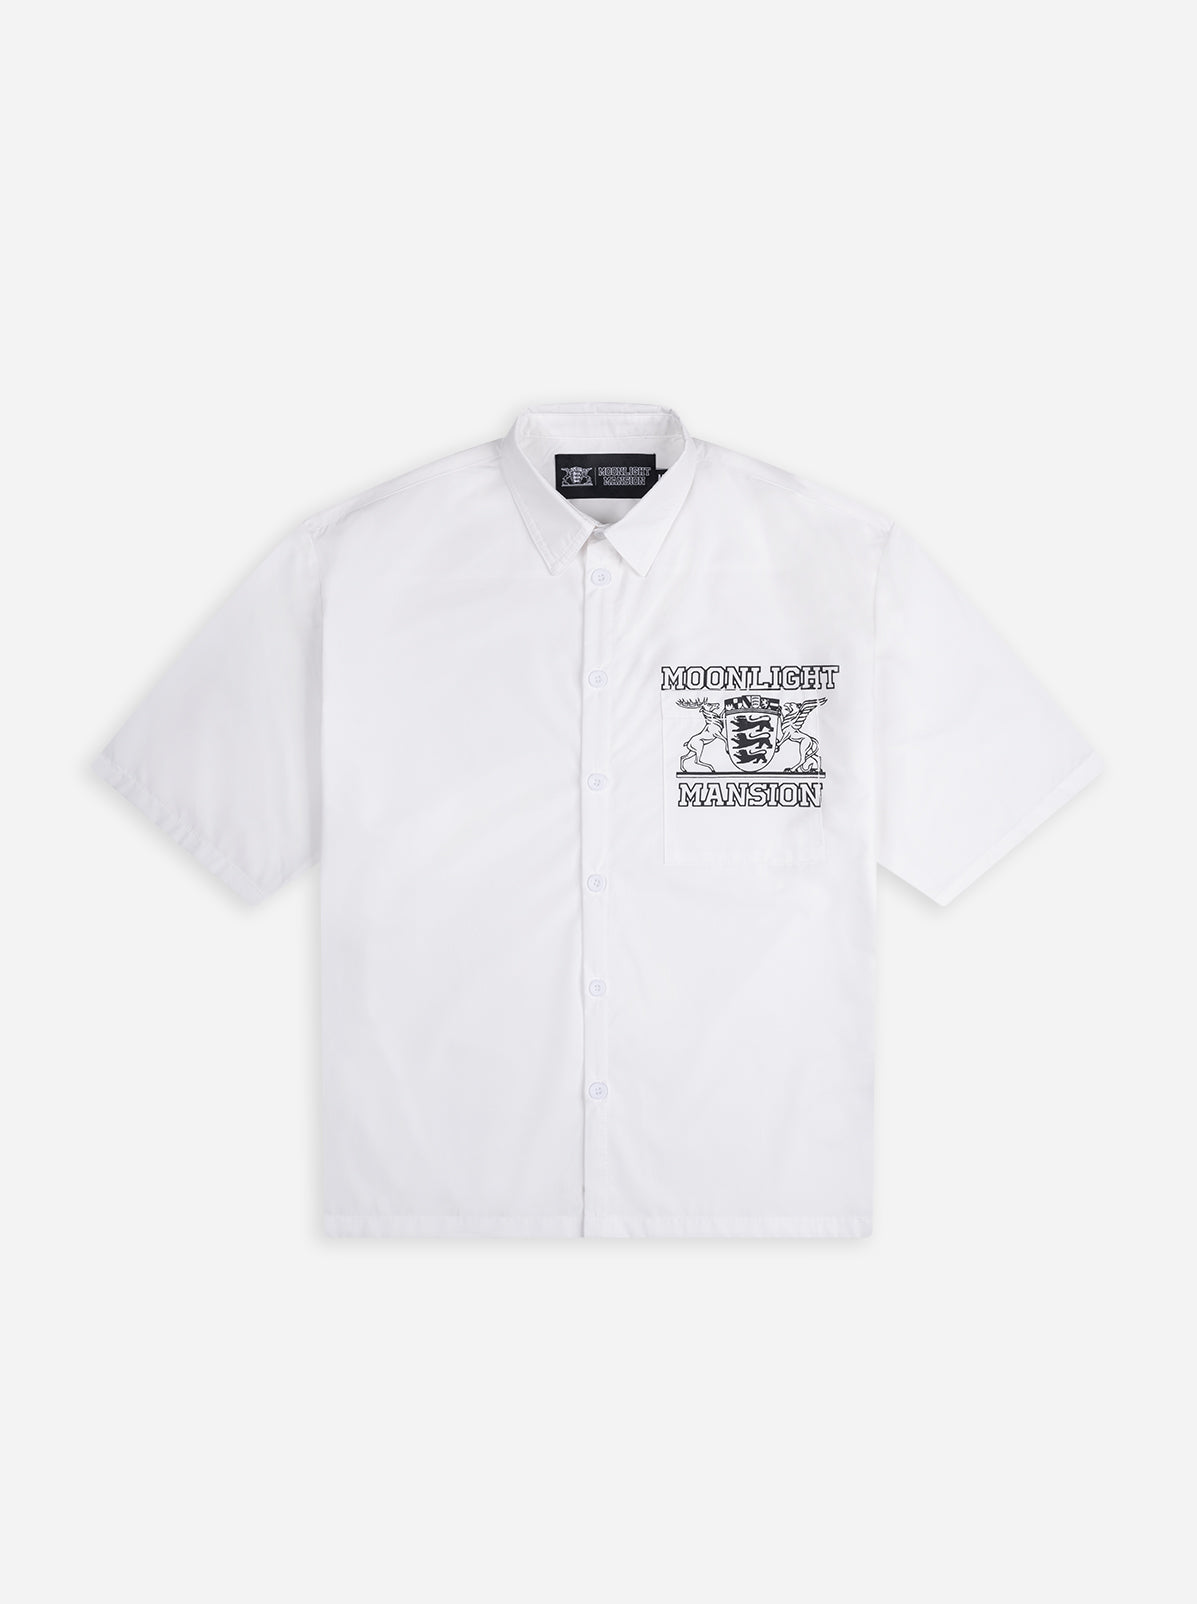 "Back2Business" Shirt - White